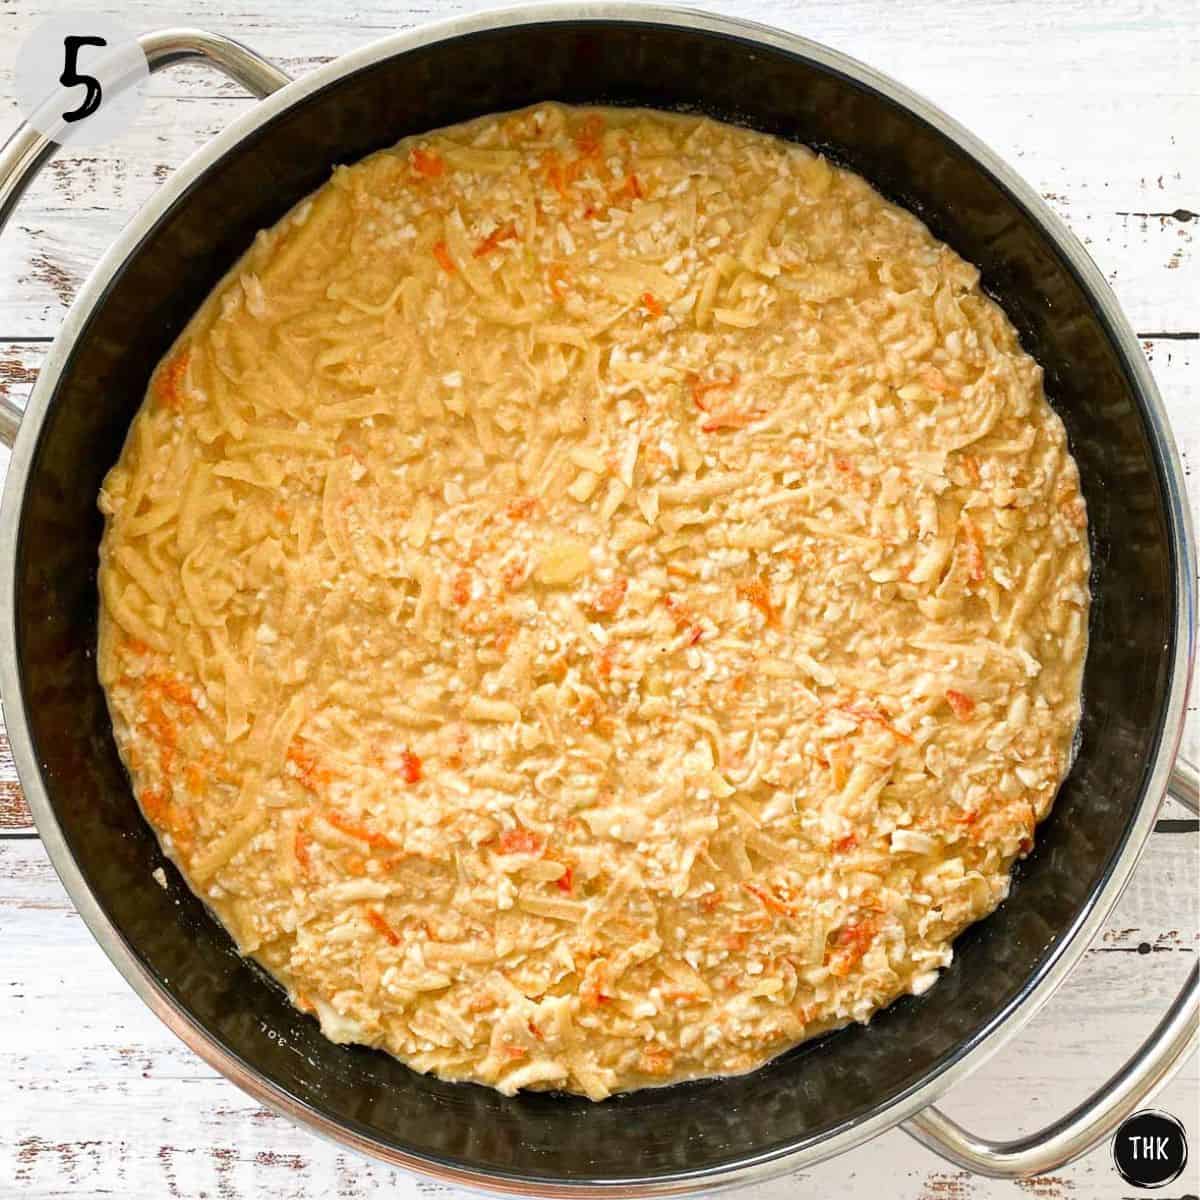 Shredded veggies and orange sauce inside large casserole pan.